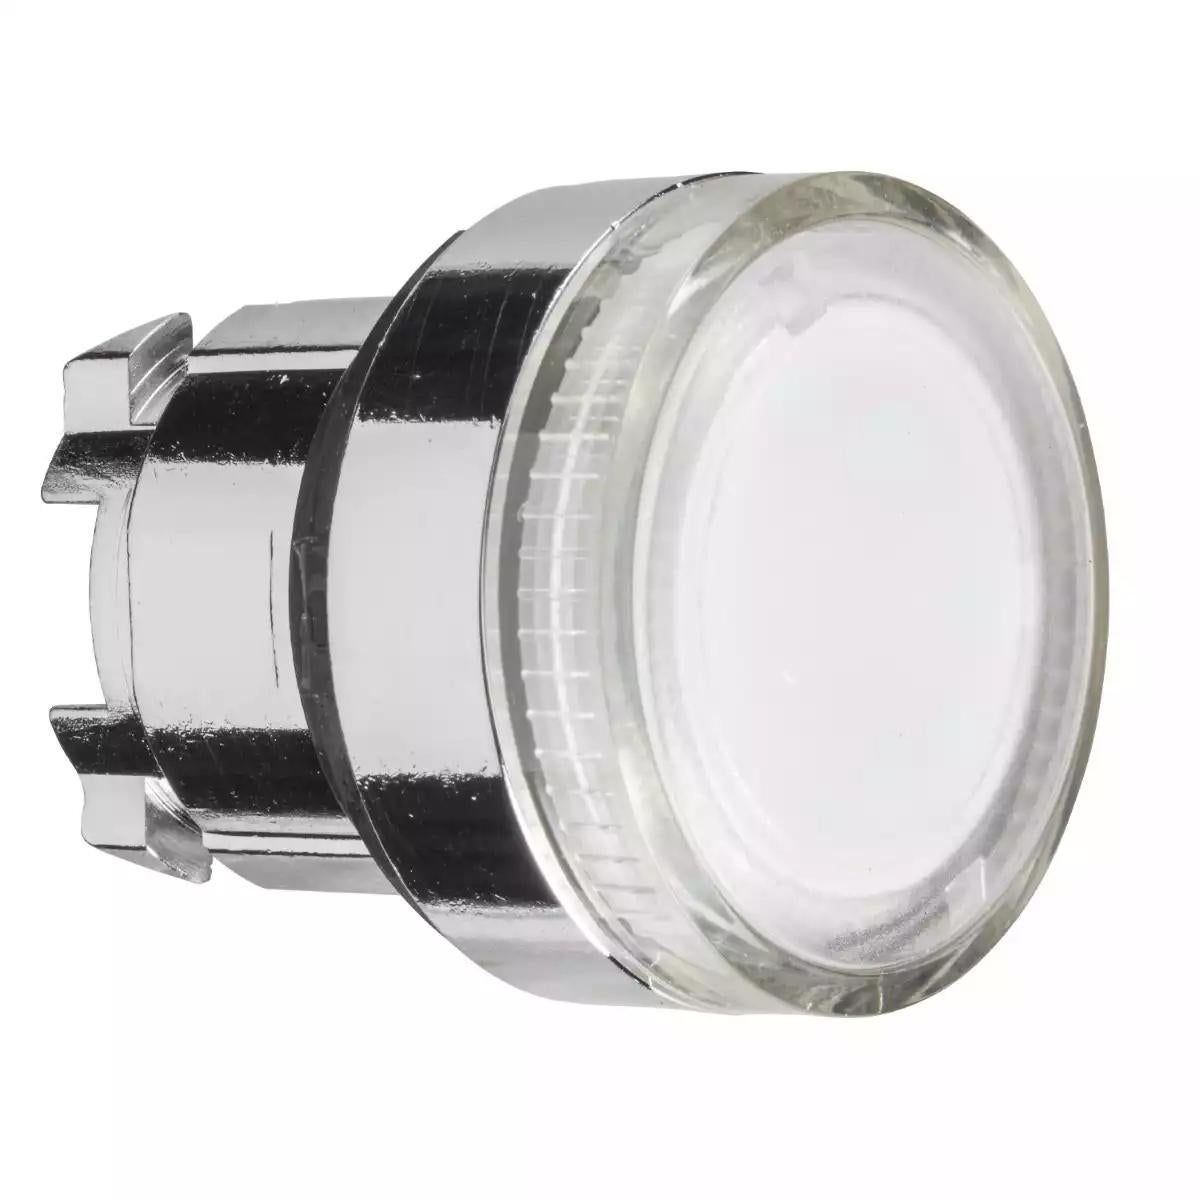 Illuminated push button head, Harmony XB4, metal, flush, clear, 22mm, spring return, plain lens for BA9s bulb